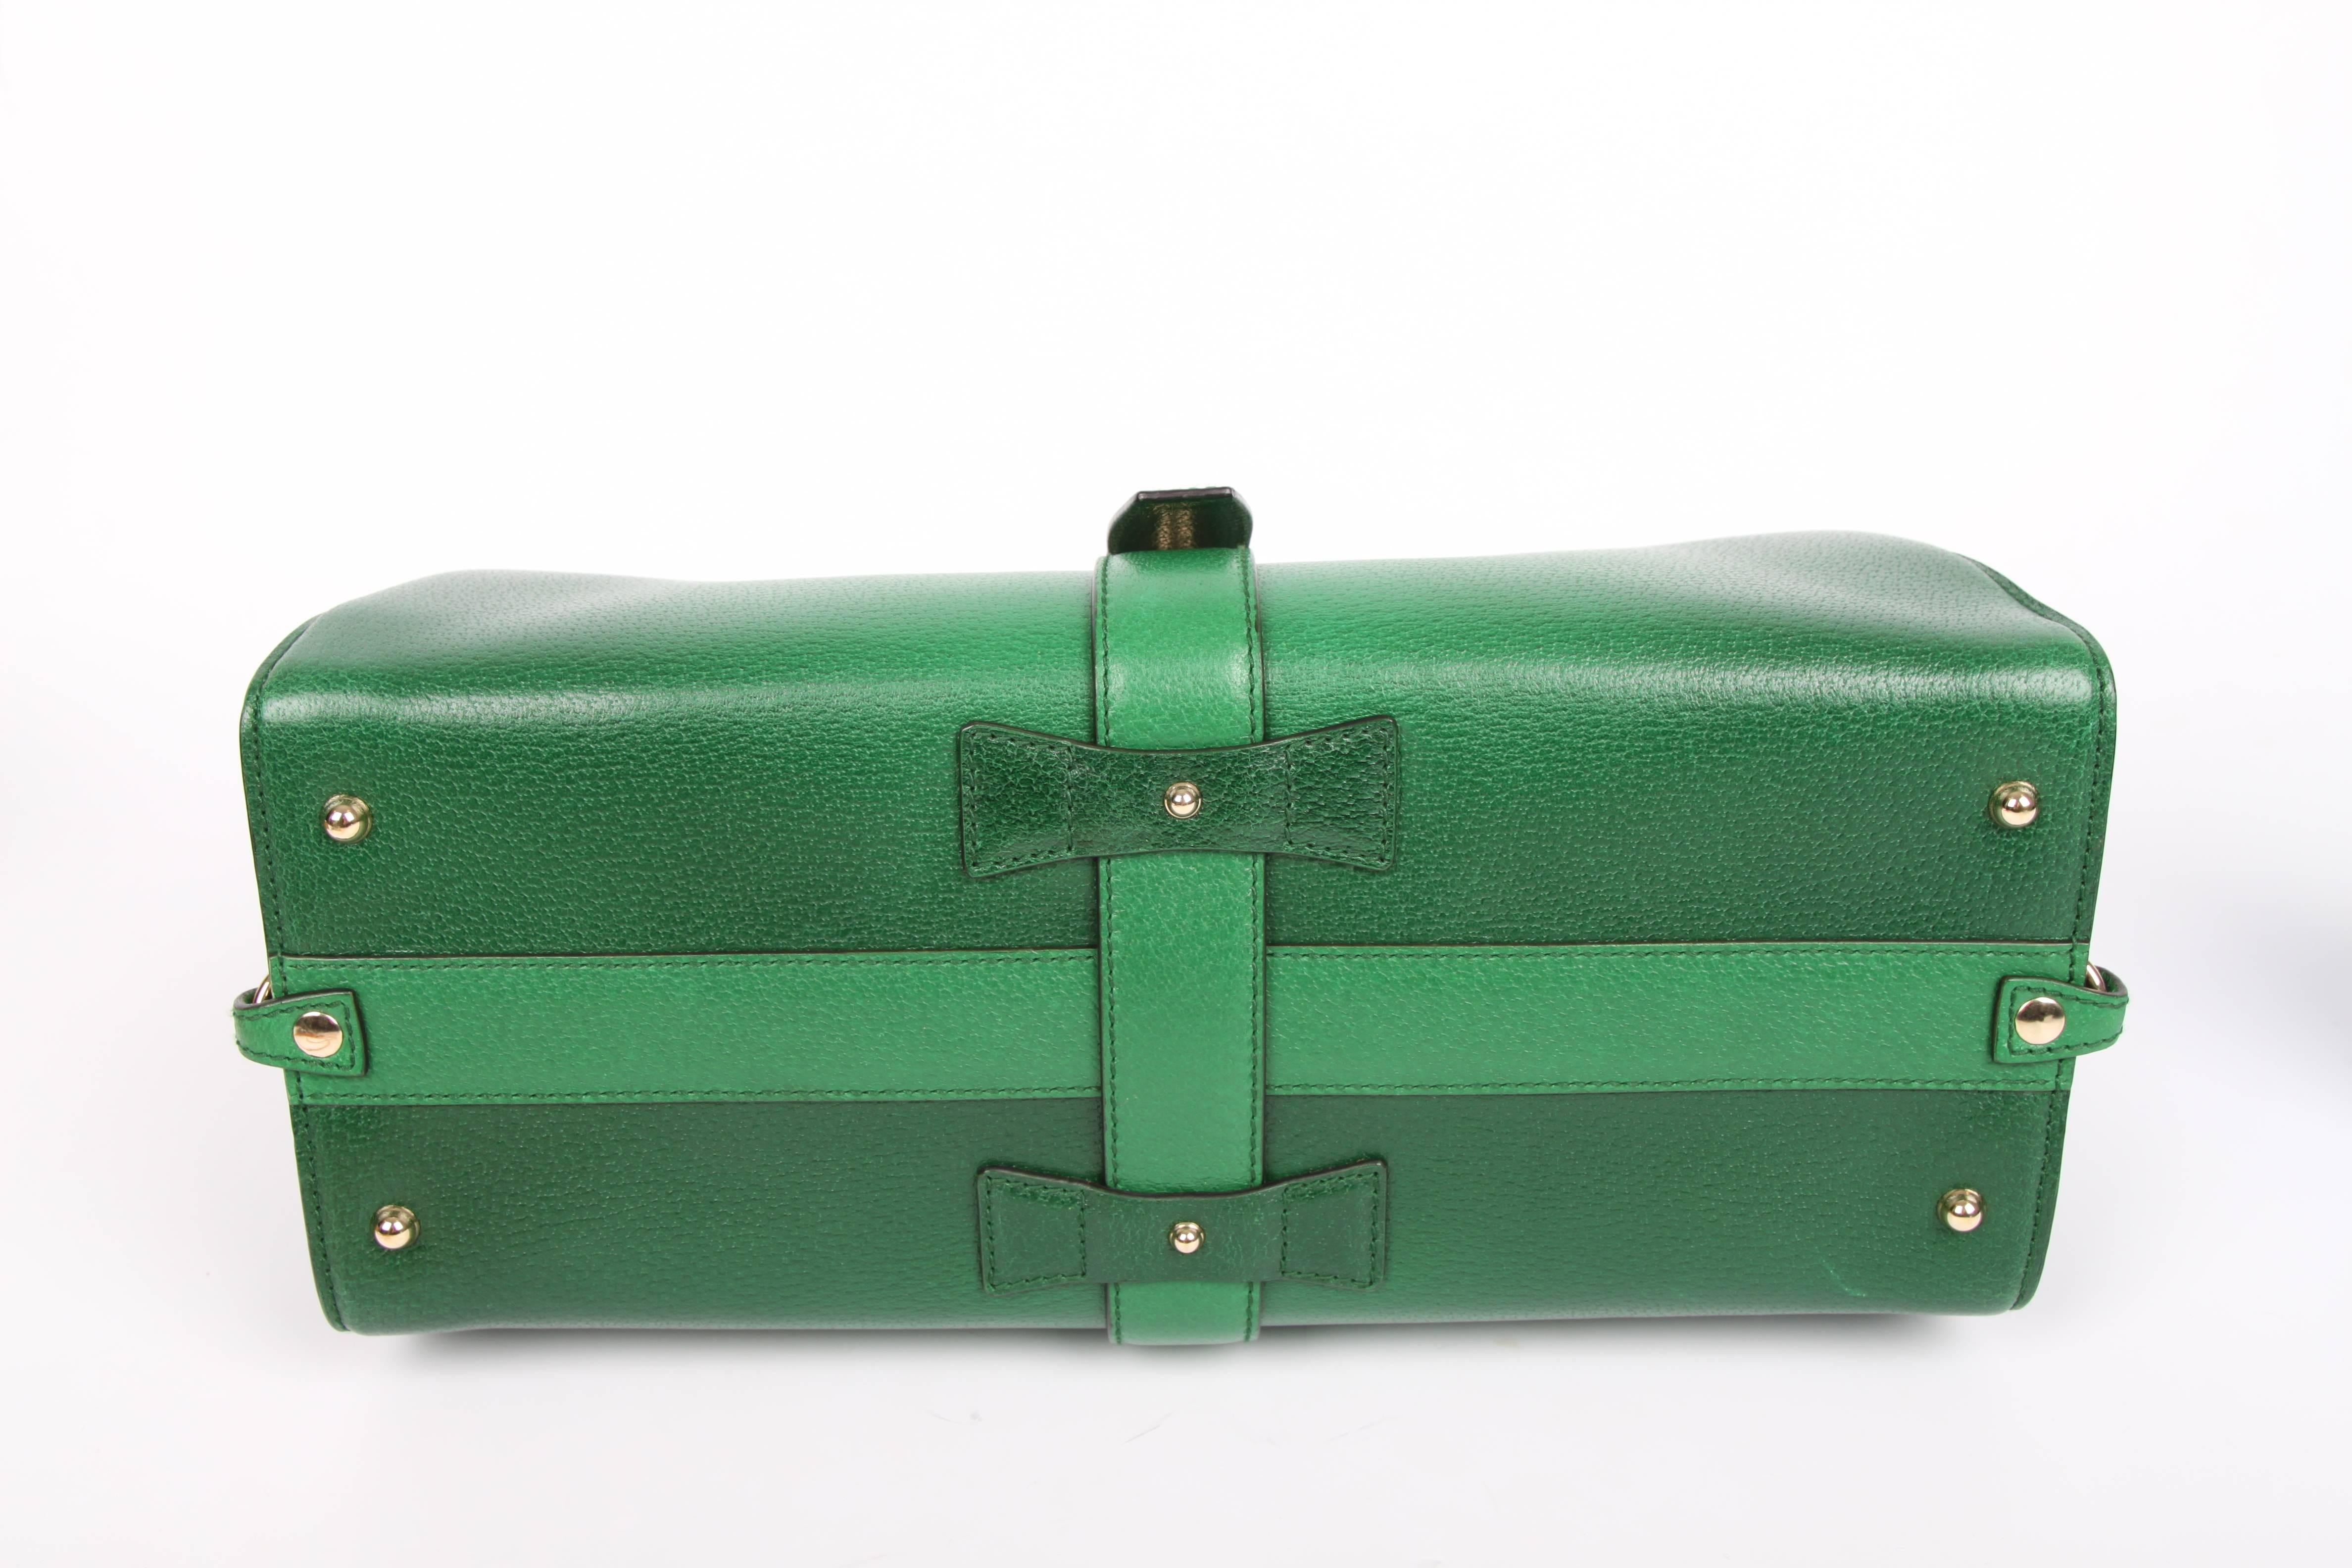 Women's   Gucci Stirrup Top Handle Bag - green   Gucci Stirrup Top Handle Bag - green   